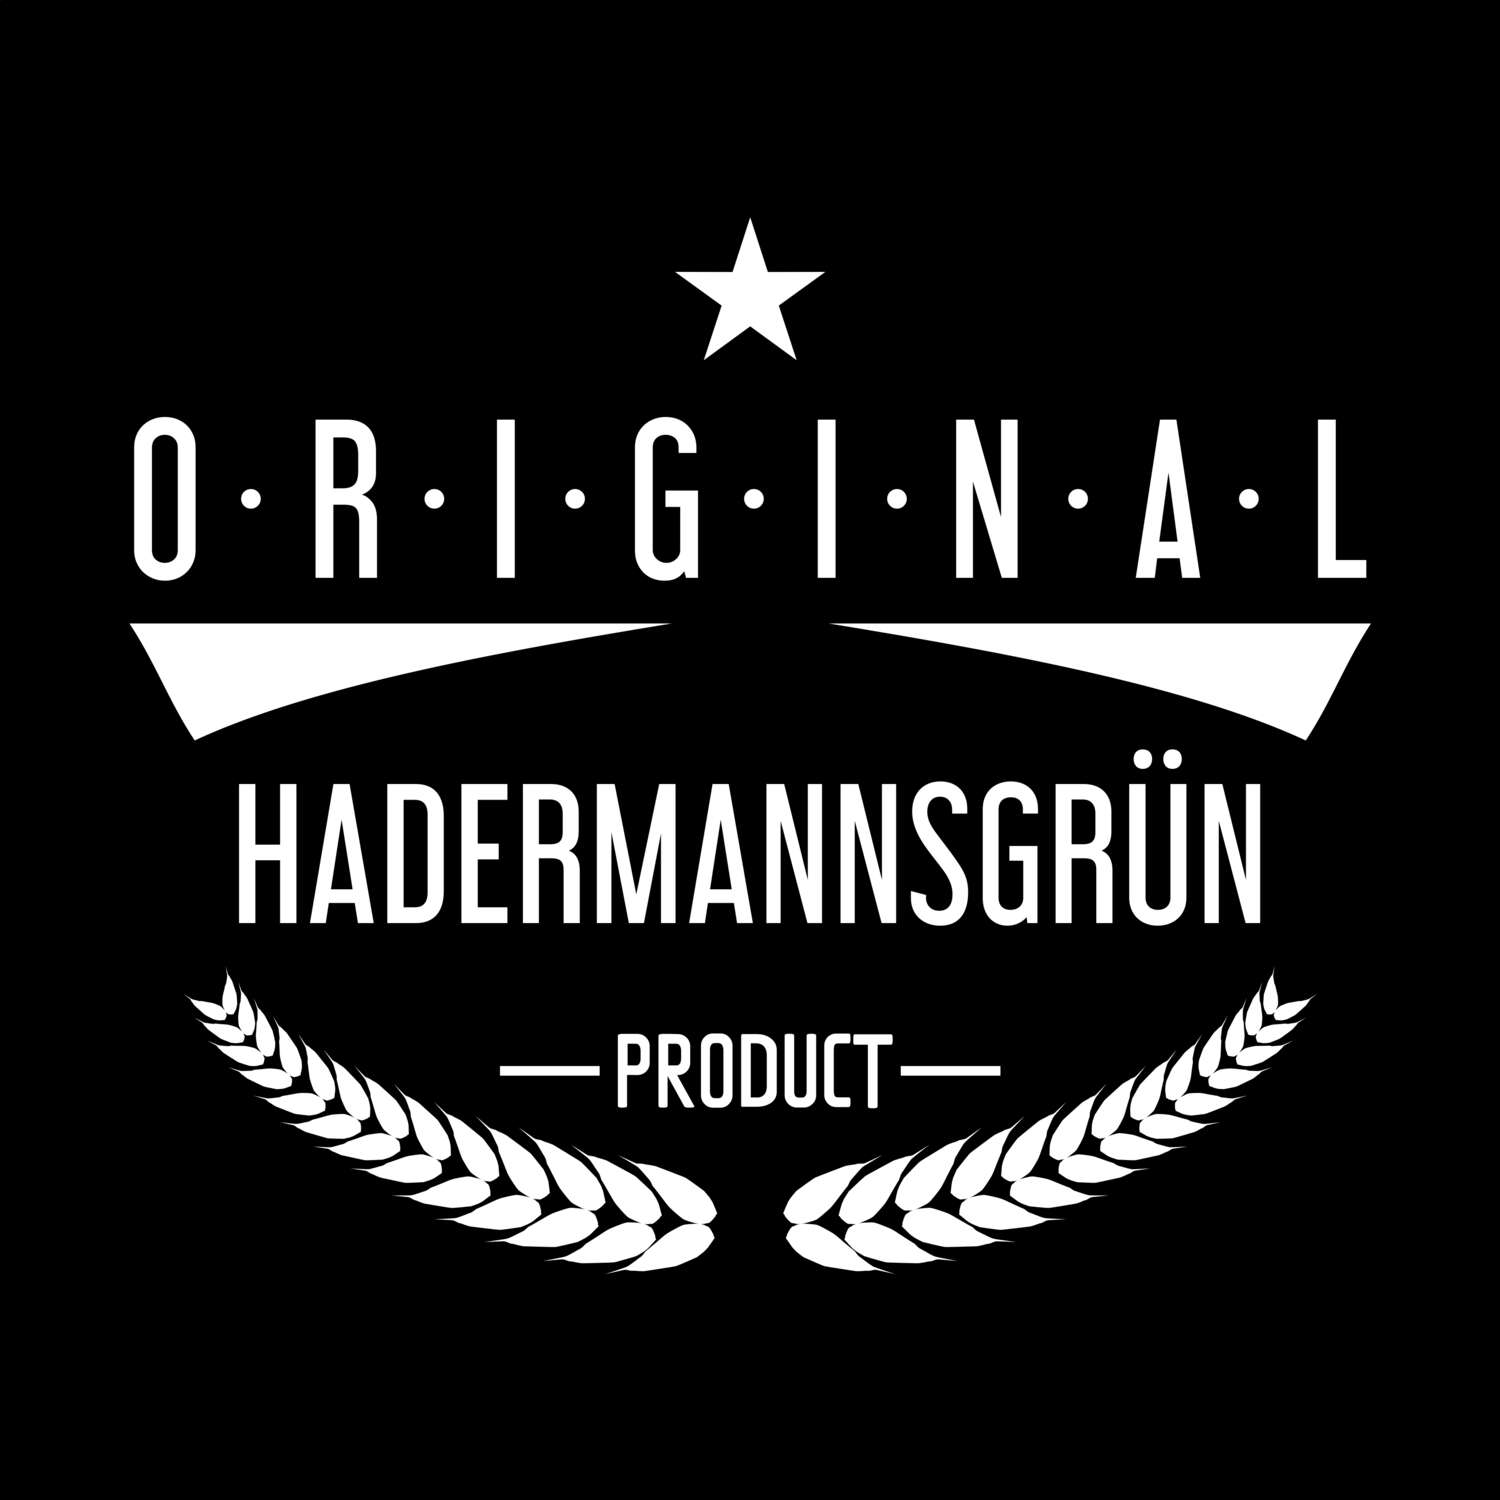 Hadermannsgrün T-Shirt »Original Product«